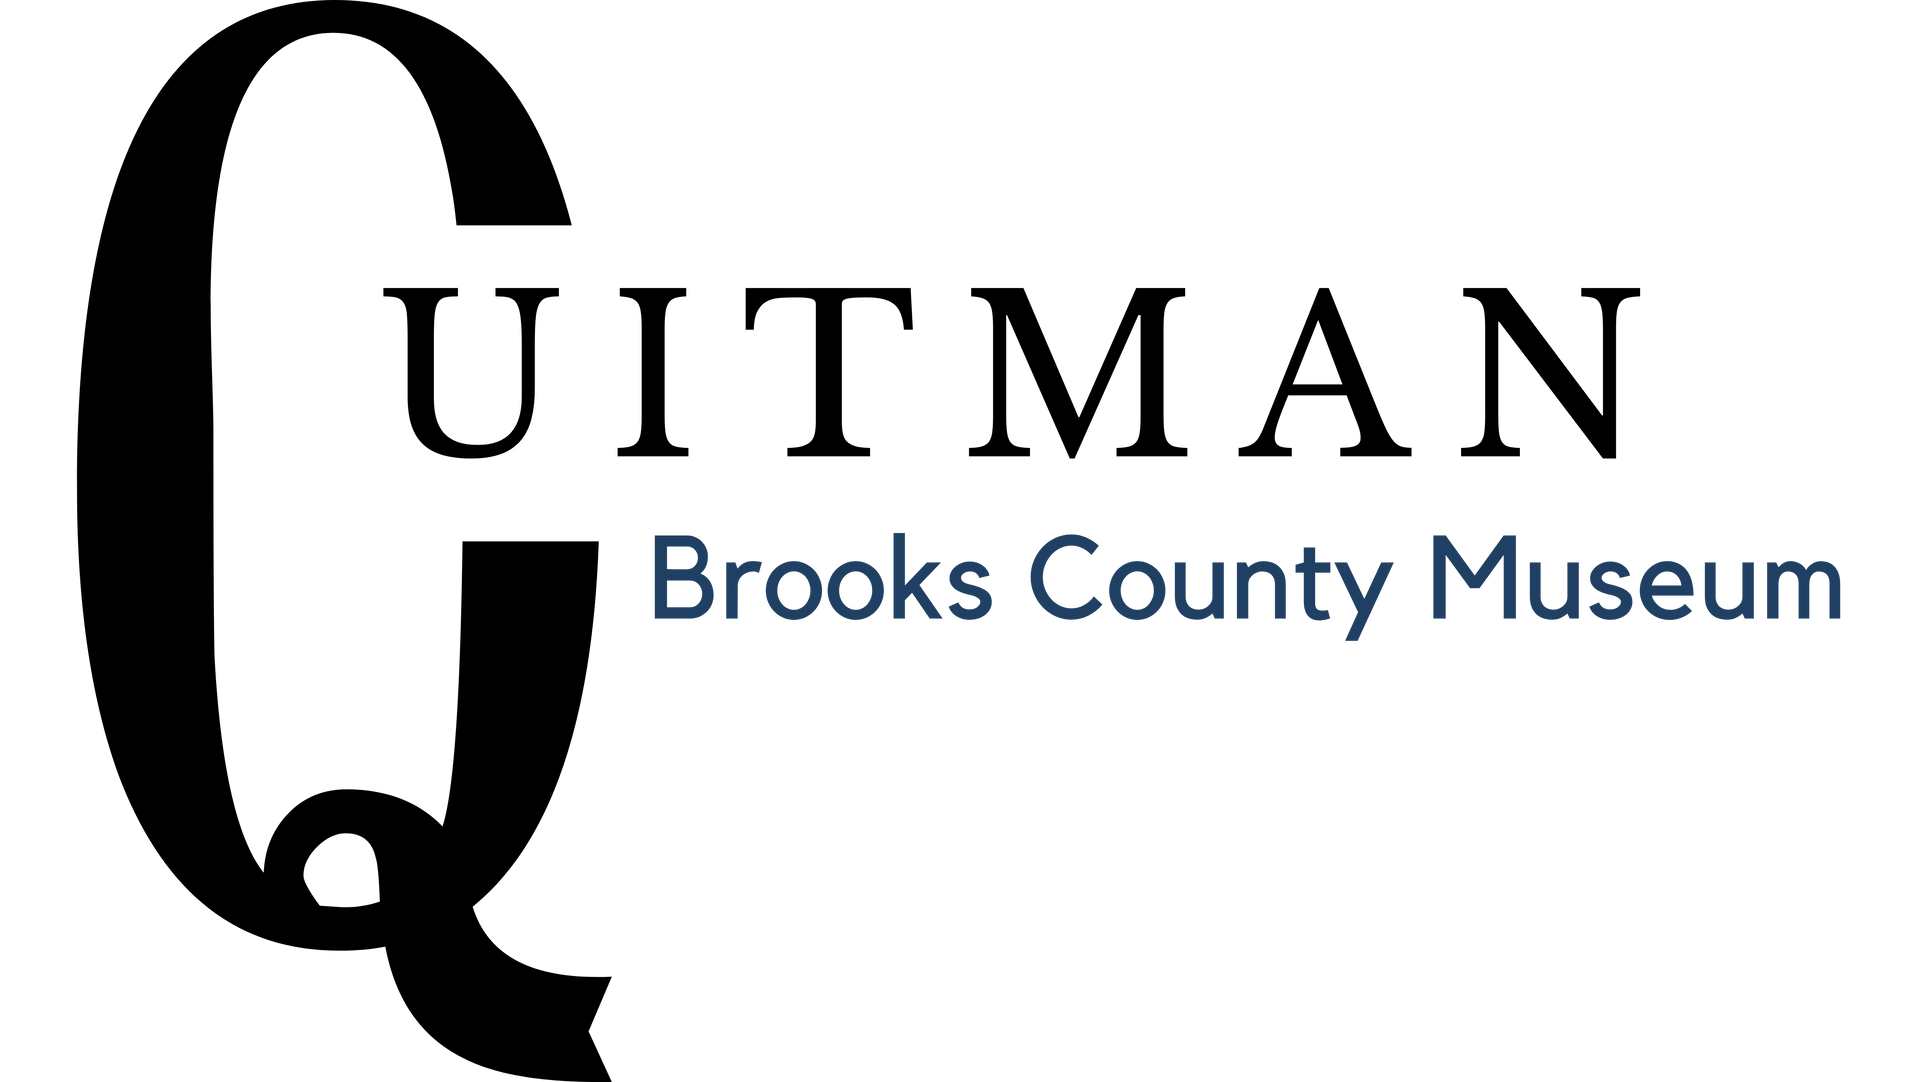 Quitman Brooks County Museum logo